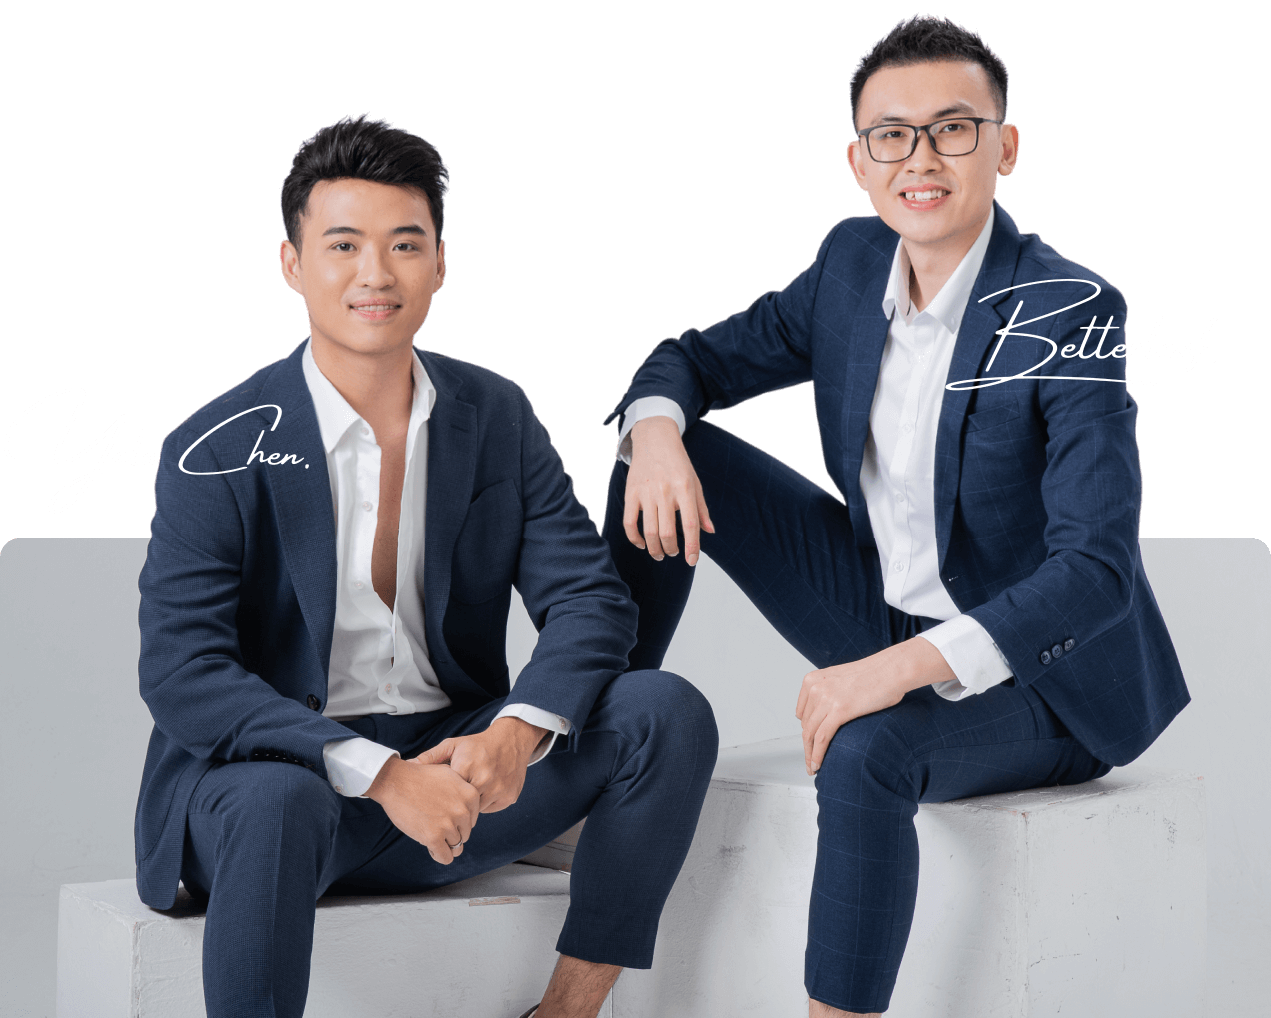 Betterleaf & Yale Chen - Byacce Co-founders - Custom Graphic - 2